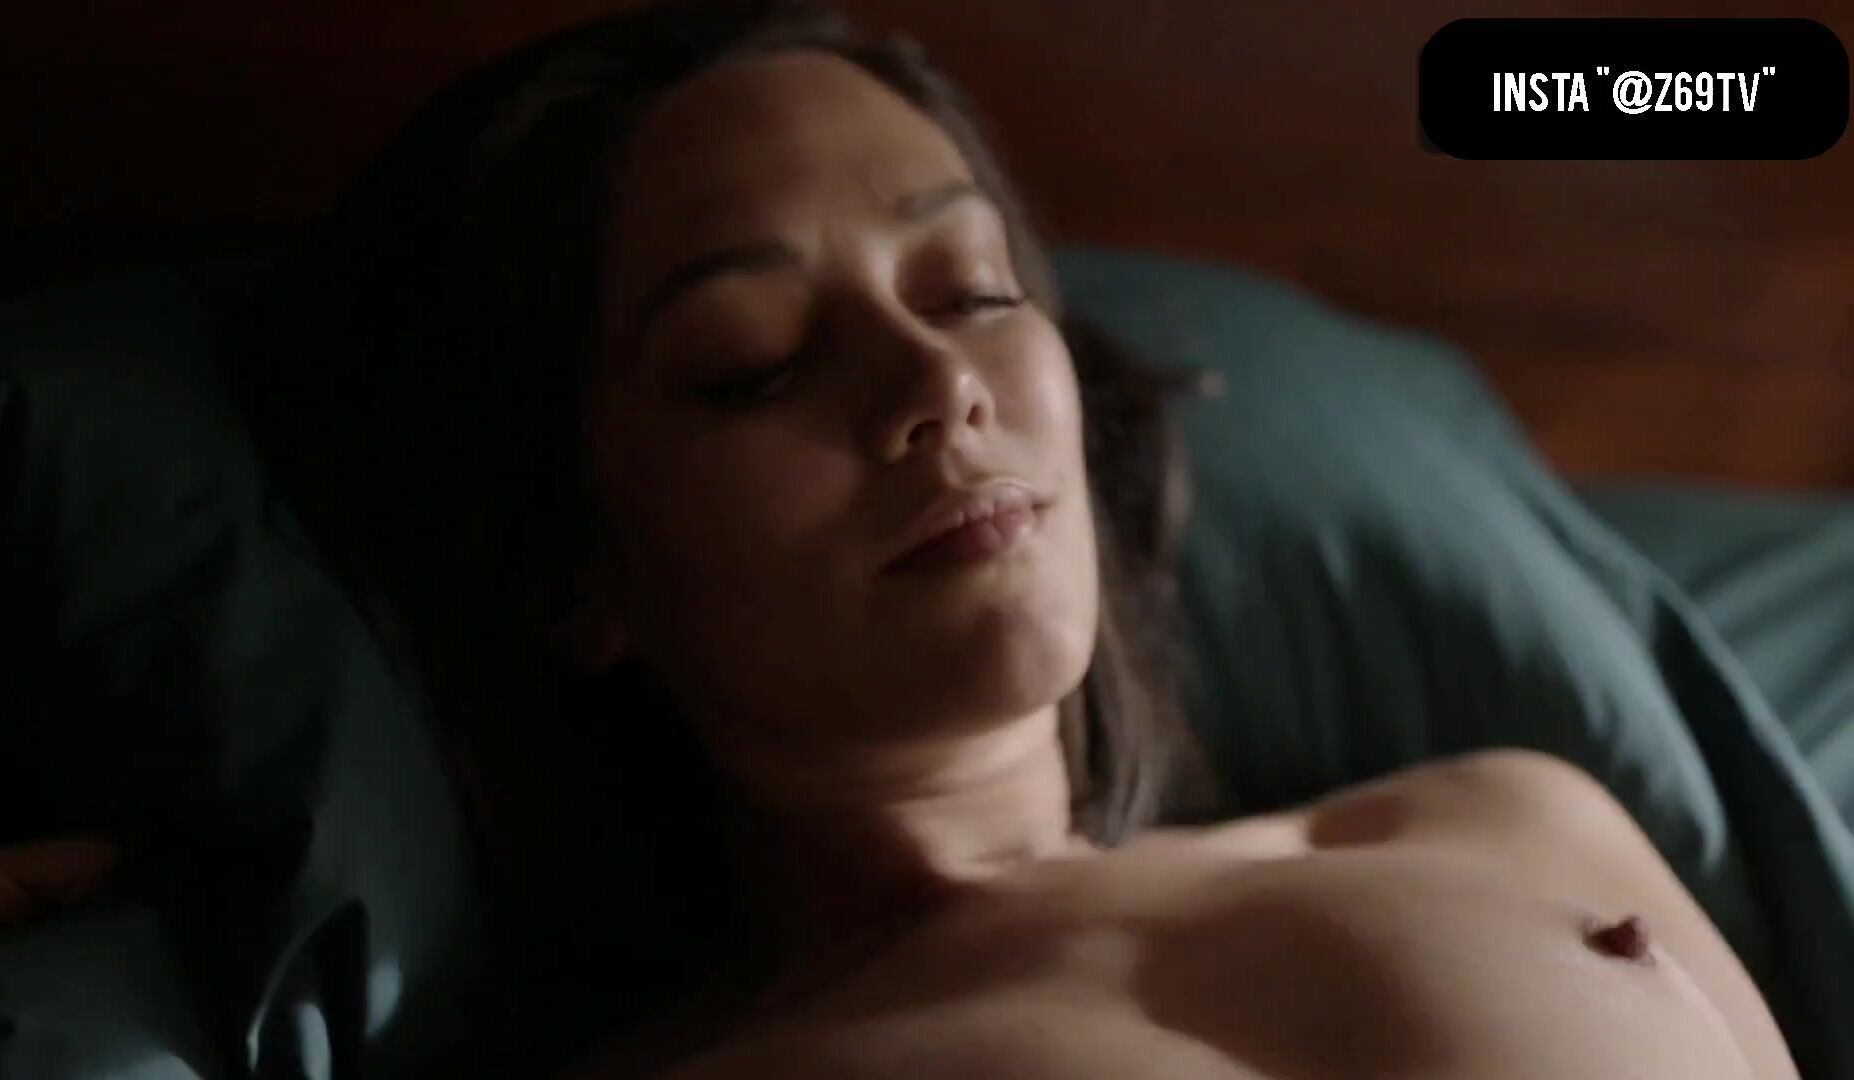 Cartoonza Lesbian sex scene of babe who puts condom on vibrator and fucks bestie in Vida Season 2 Banging